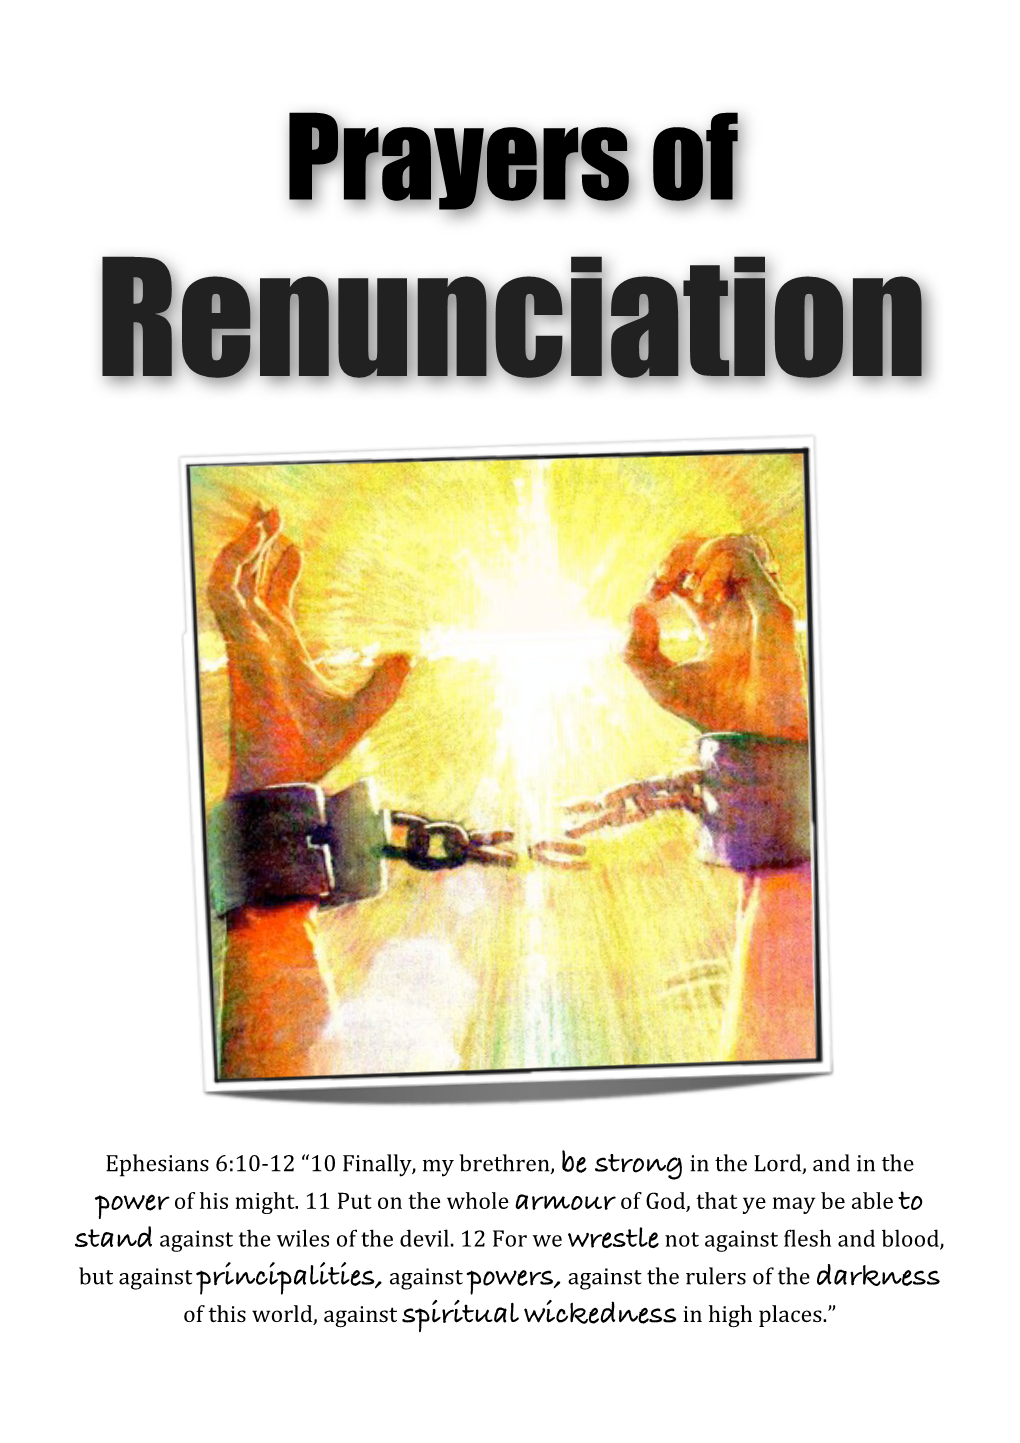 Prayer of Renunciation – Dead Human Spirits